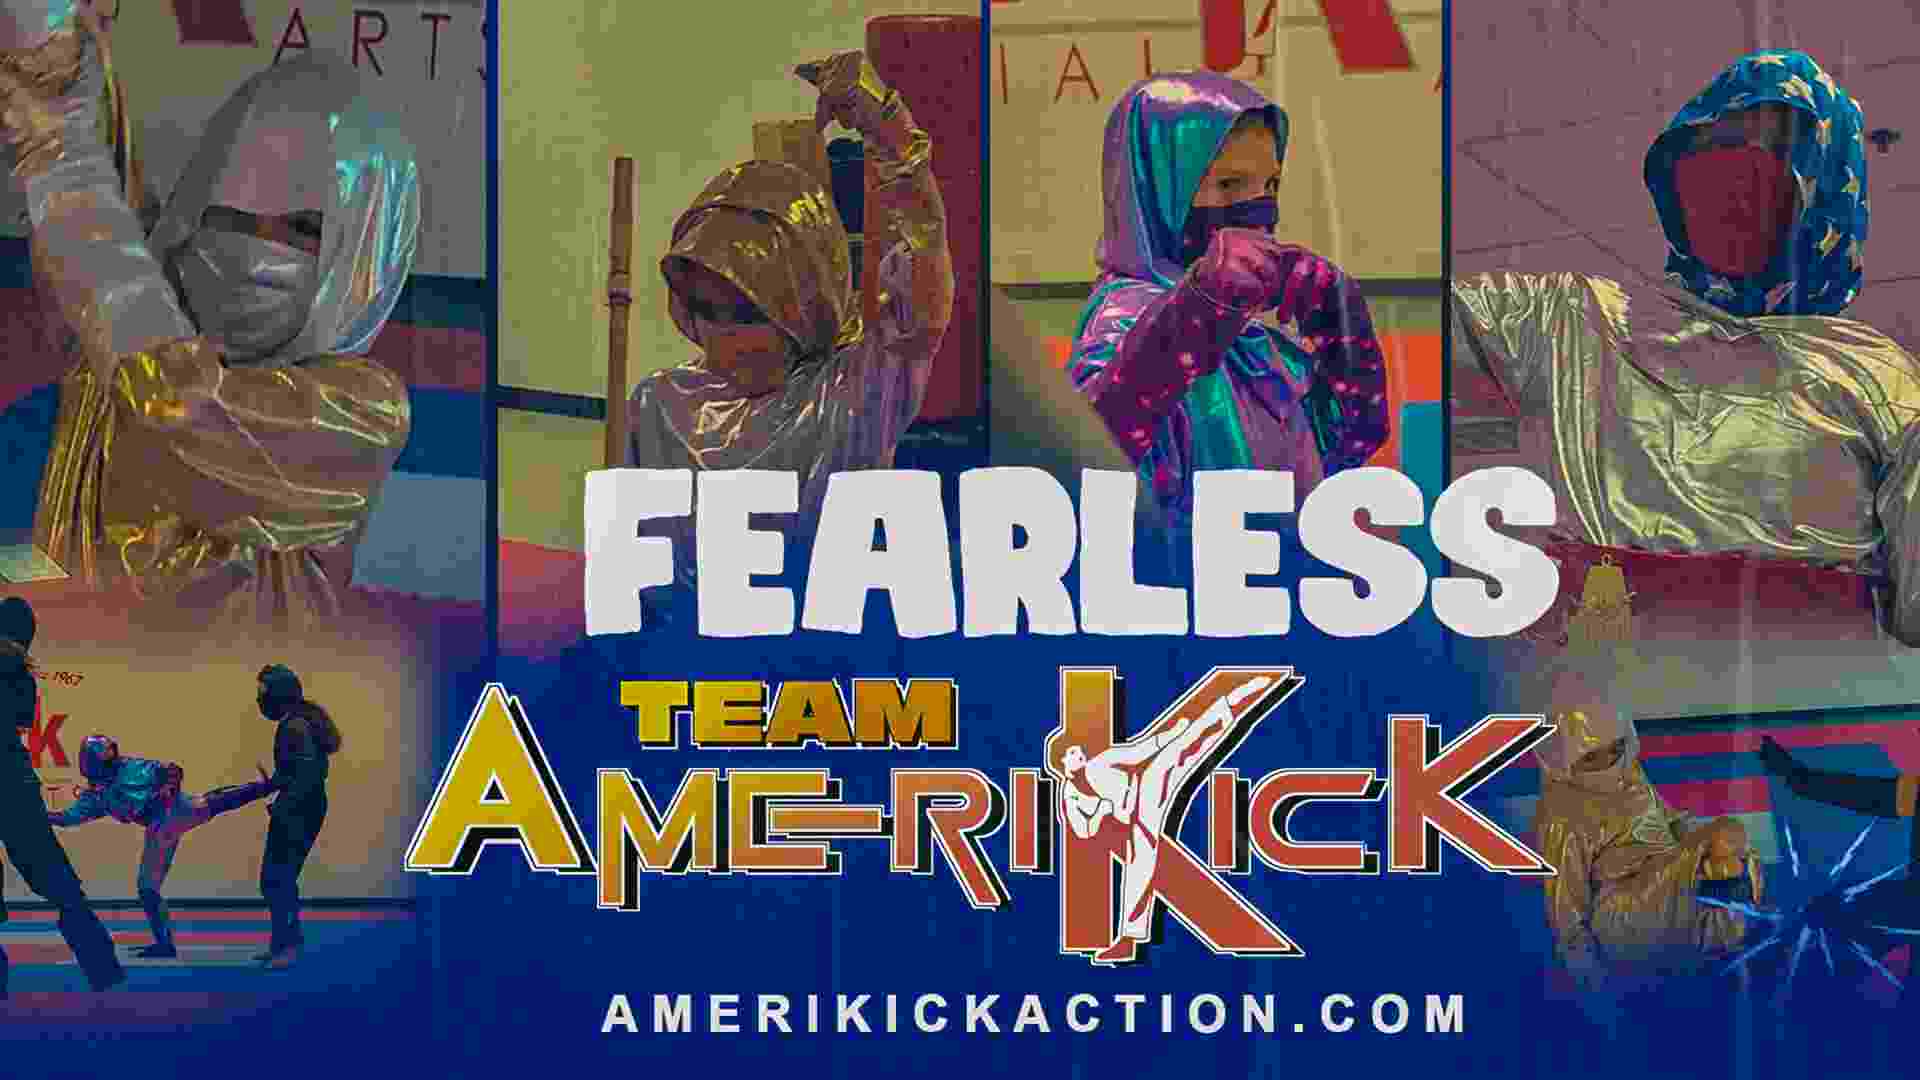 Amerikick Action | Team AmeriKick: FEARLESS